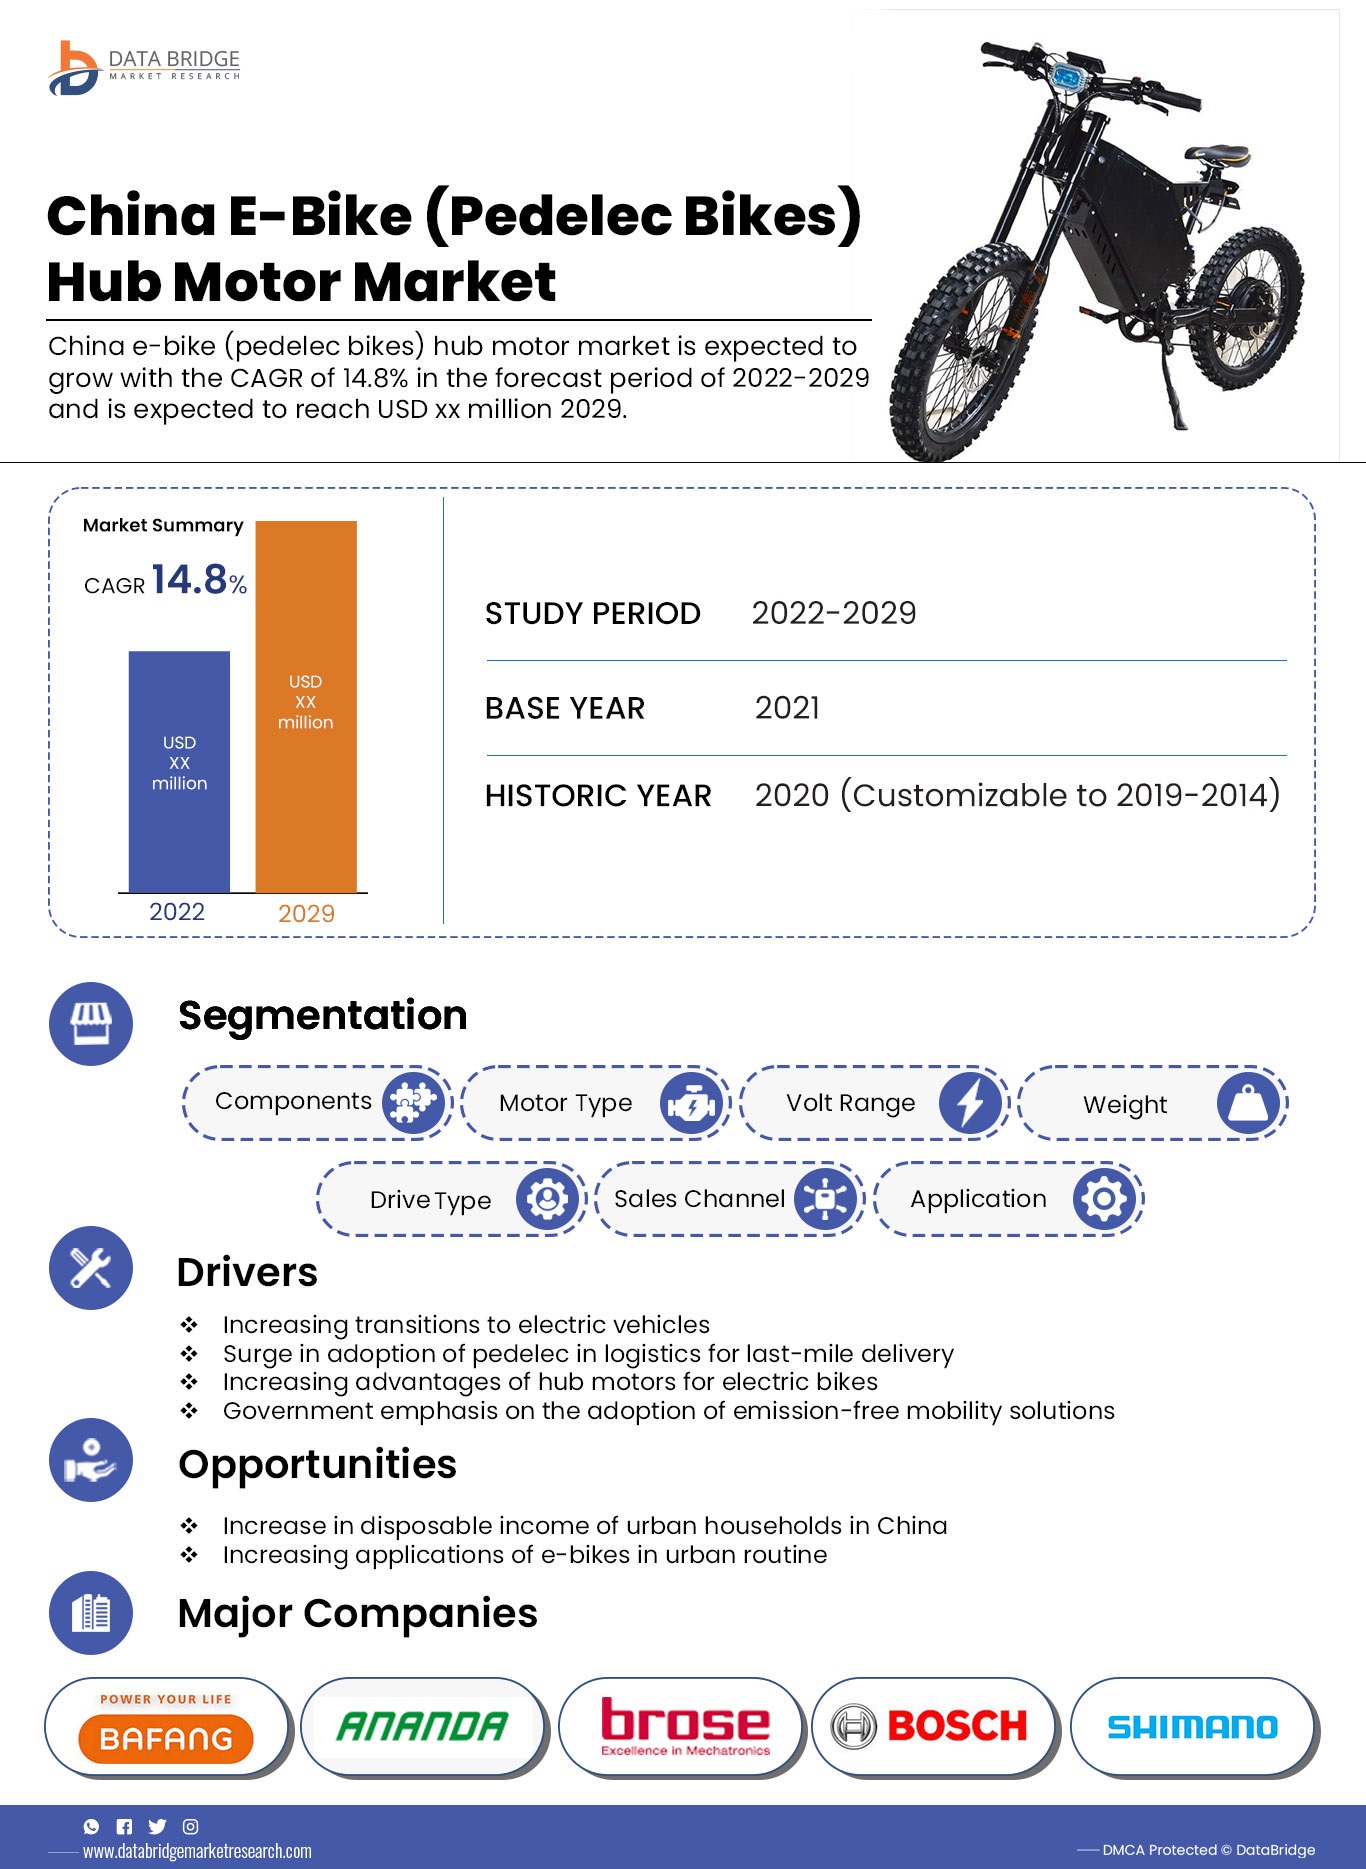 E-Bike Hub Motor Market